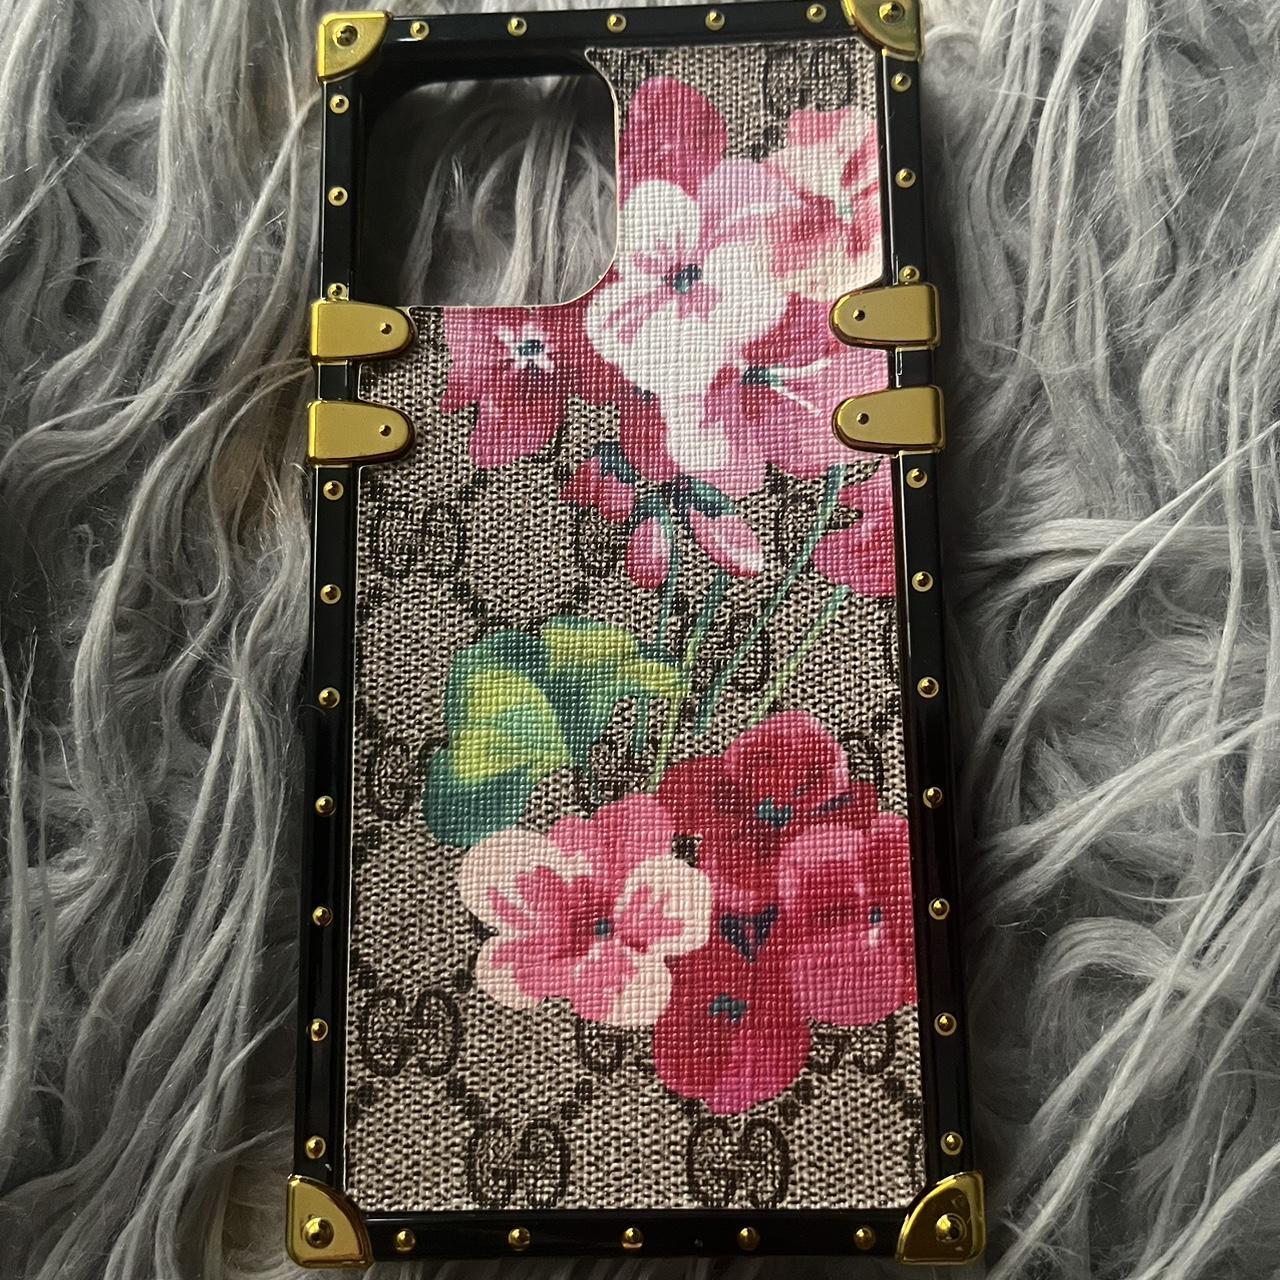 Louis Vuitton iPhone XR case - Depop